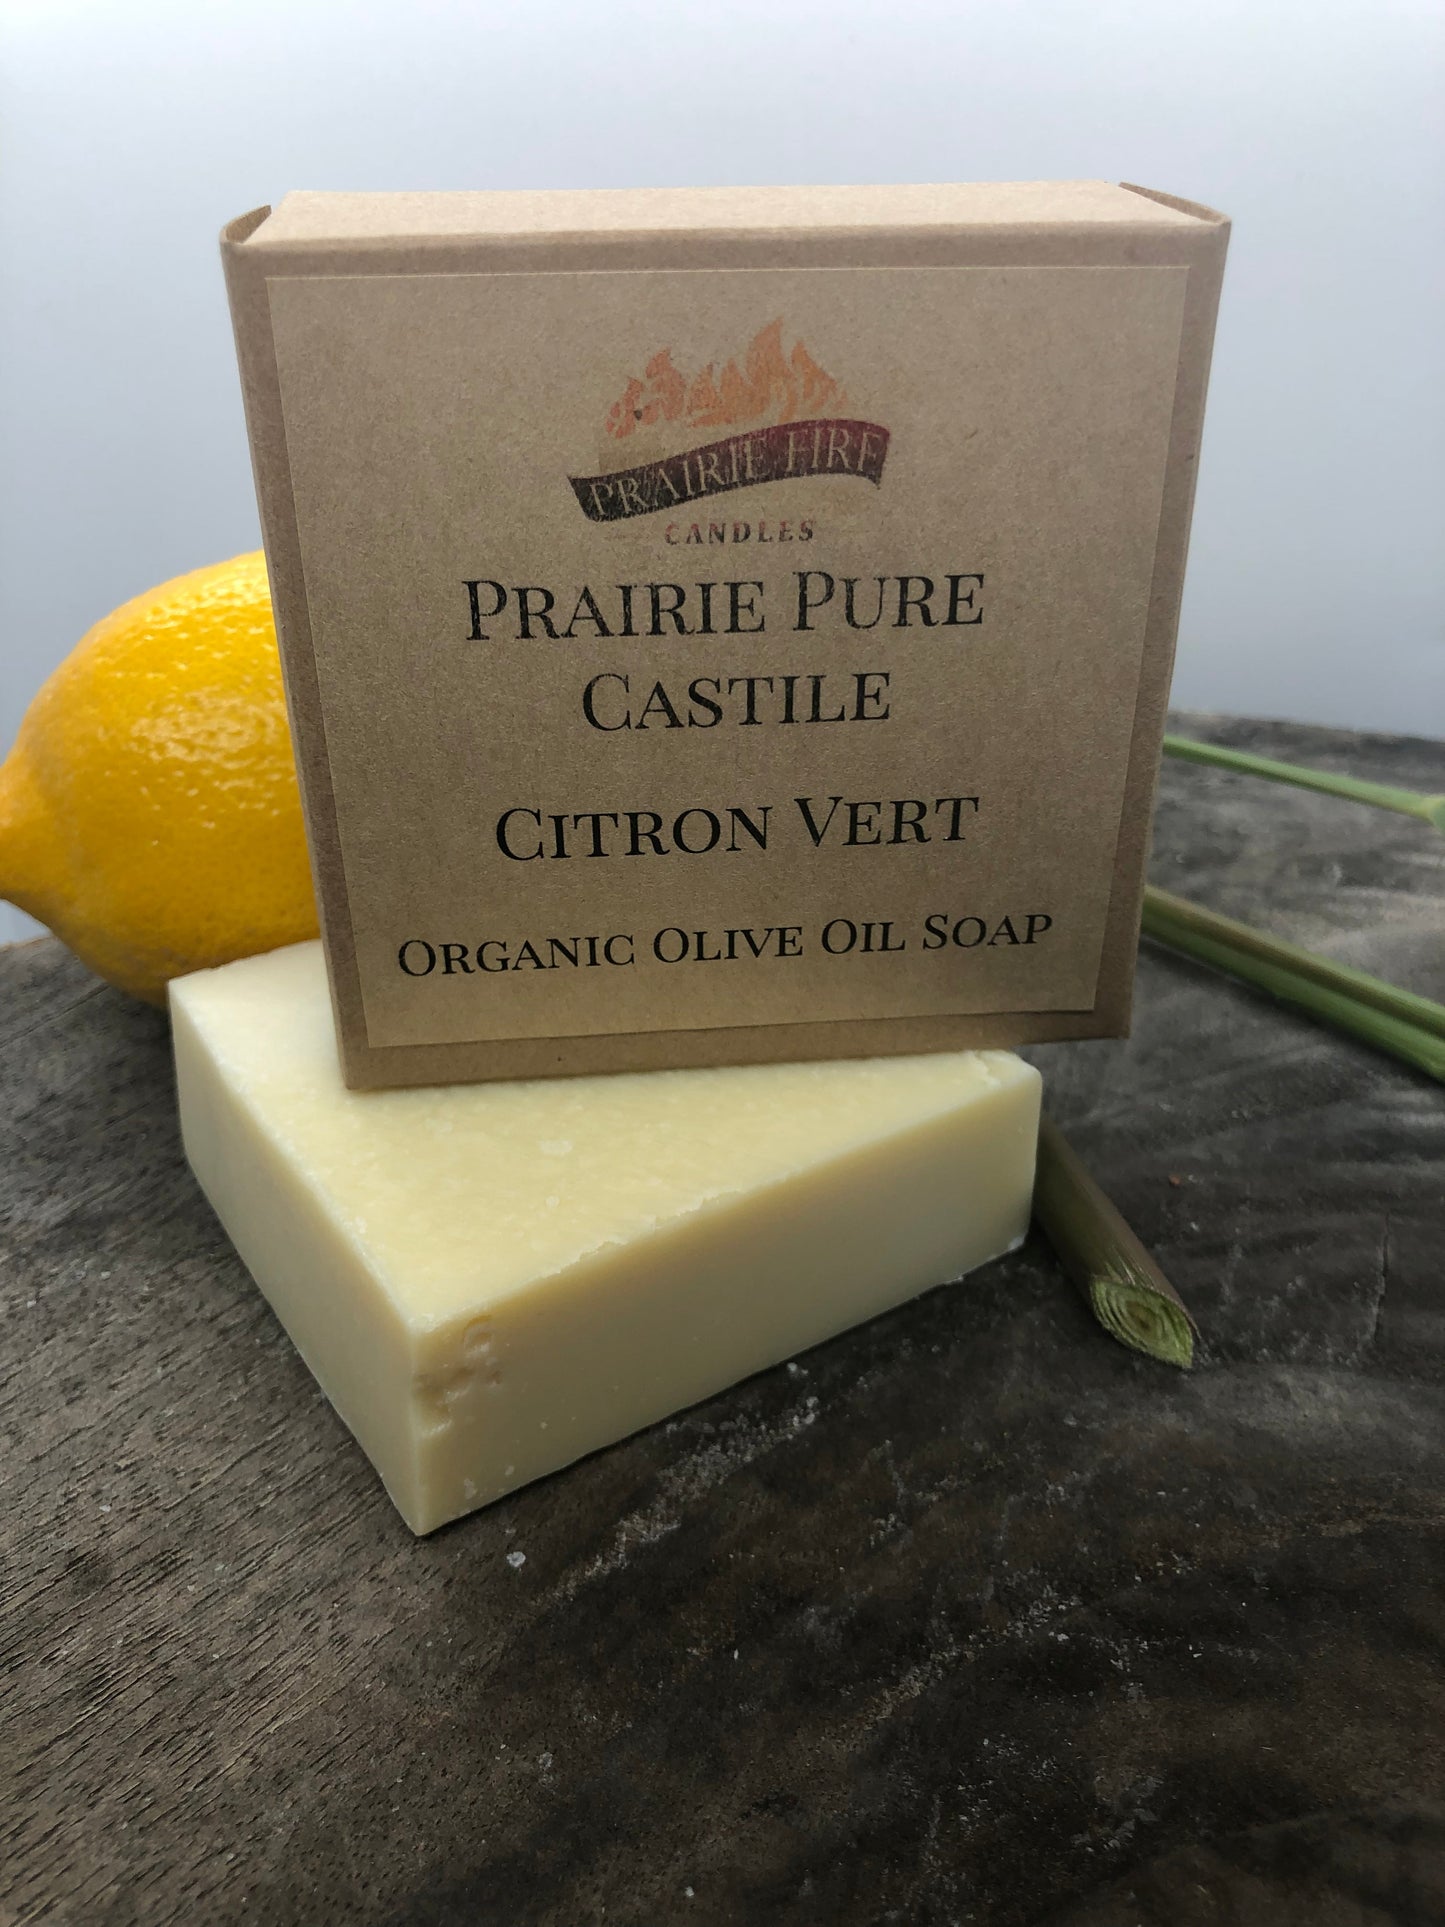 Citron Vert Real Castile Organic Olive Oil Soap for Sensitive Skin - Dye Free - 100% Certified Organic Extra Virgin Olive Oil